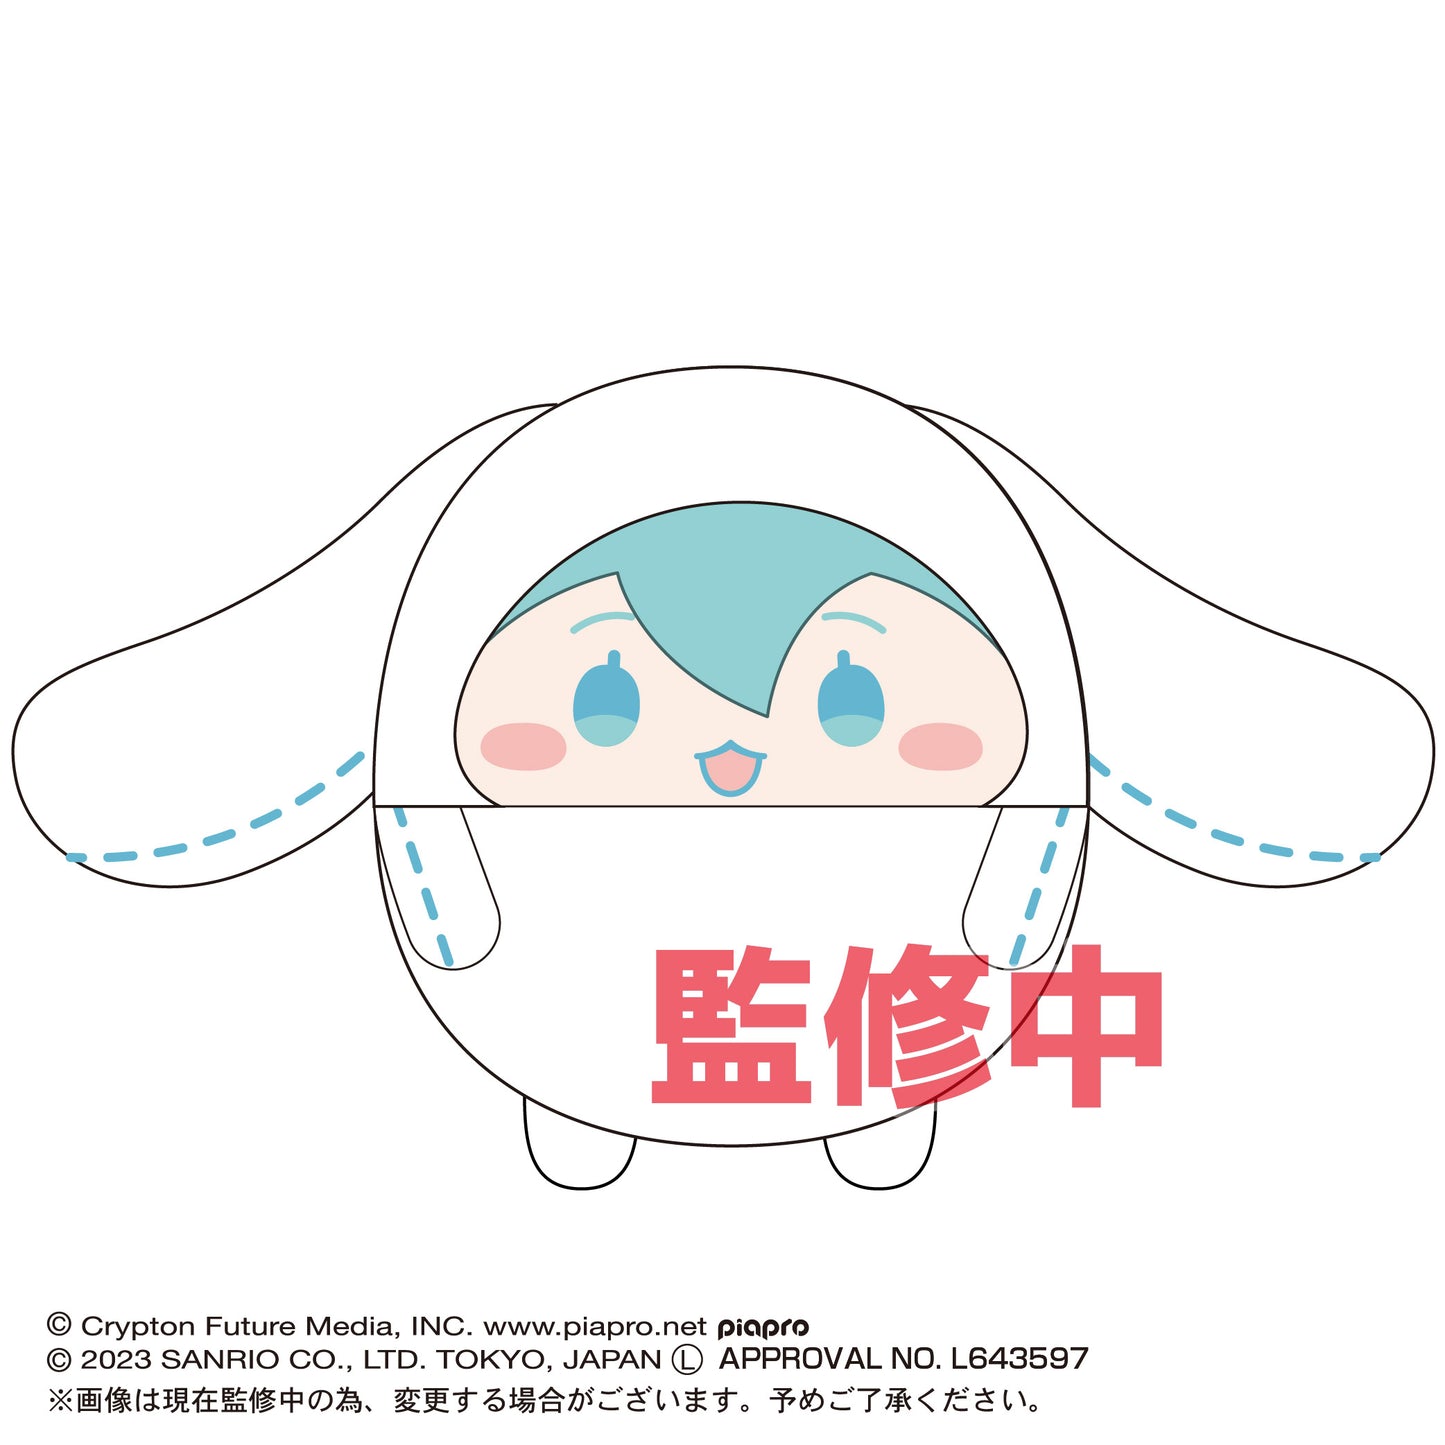 (Pre-Order) MC-01 Hatsune Miku x Cinnamoroll Fuwakororin - Small Plushy